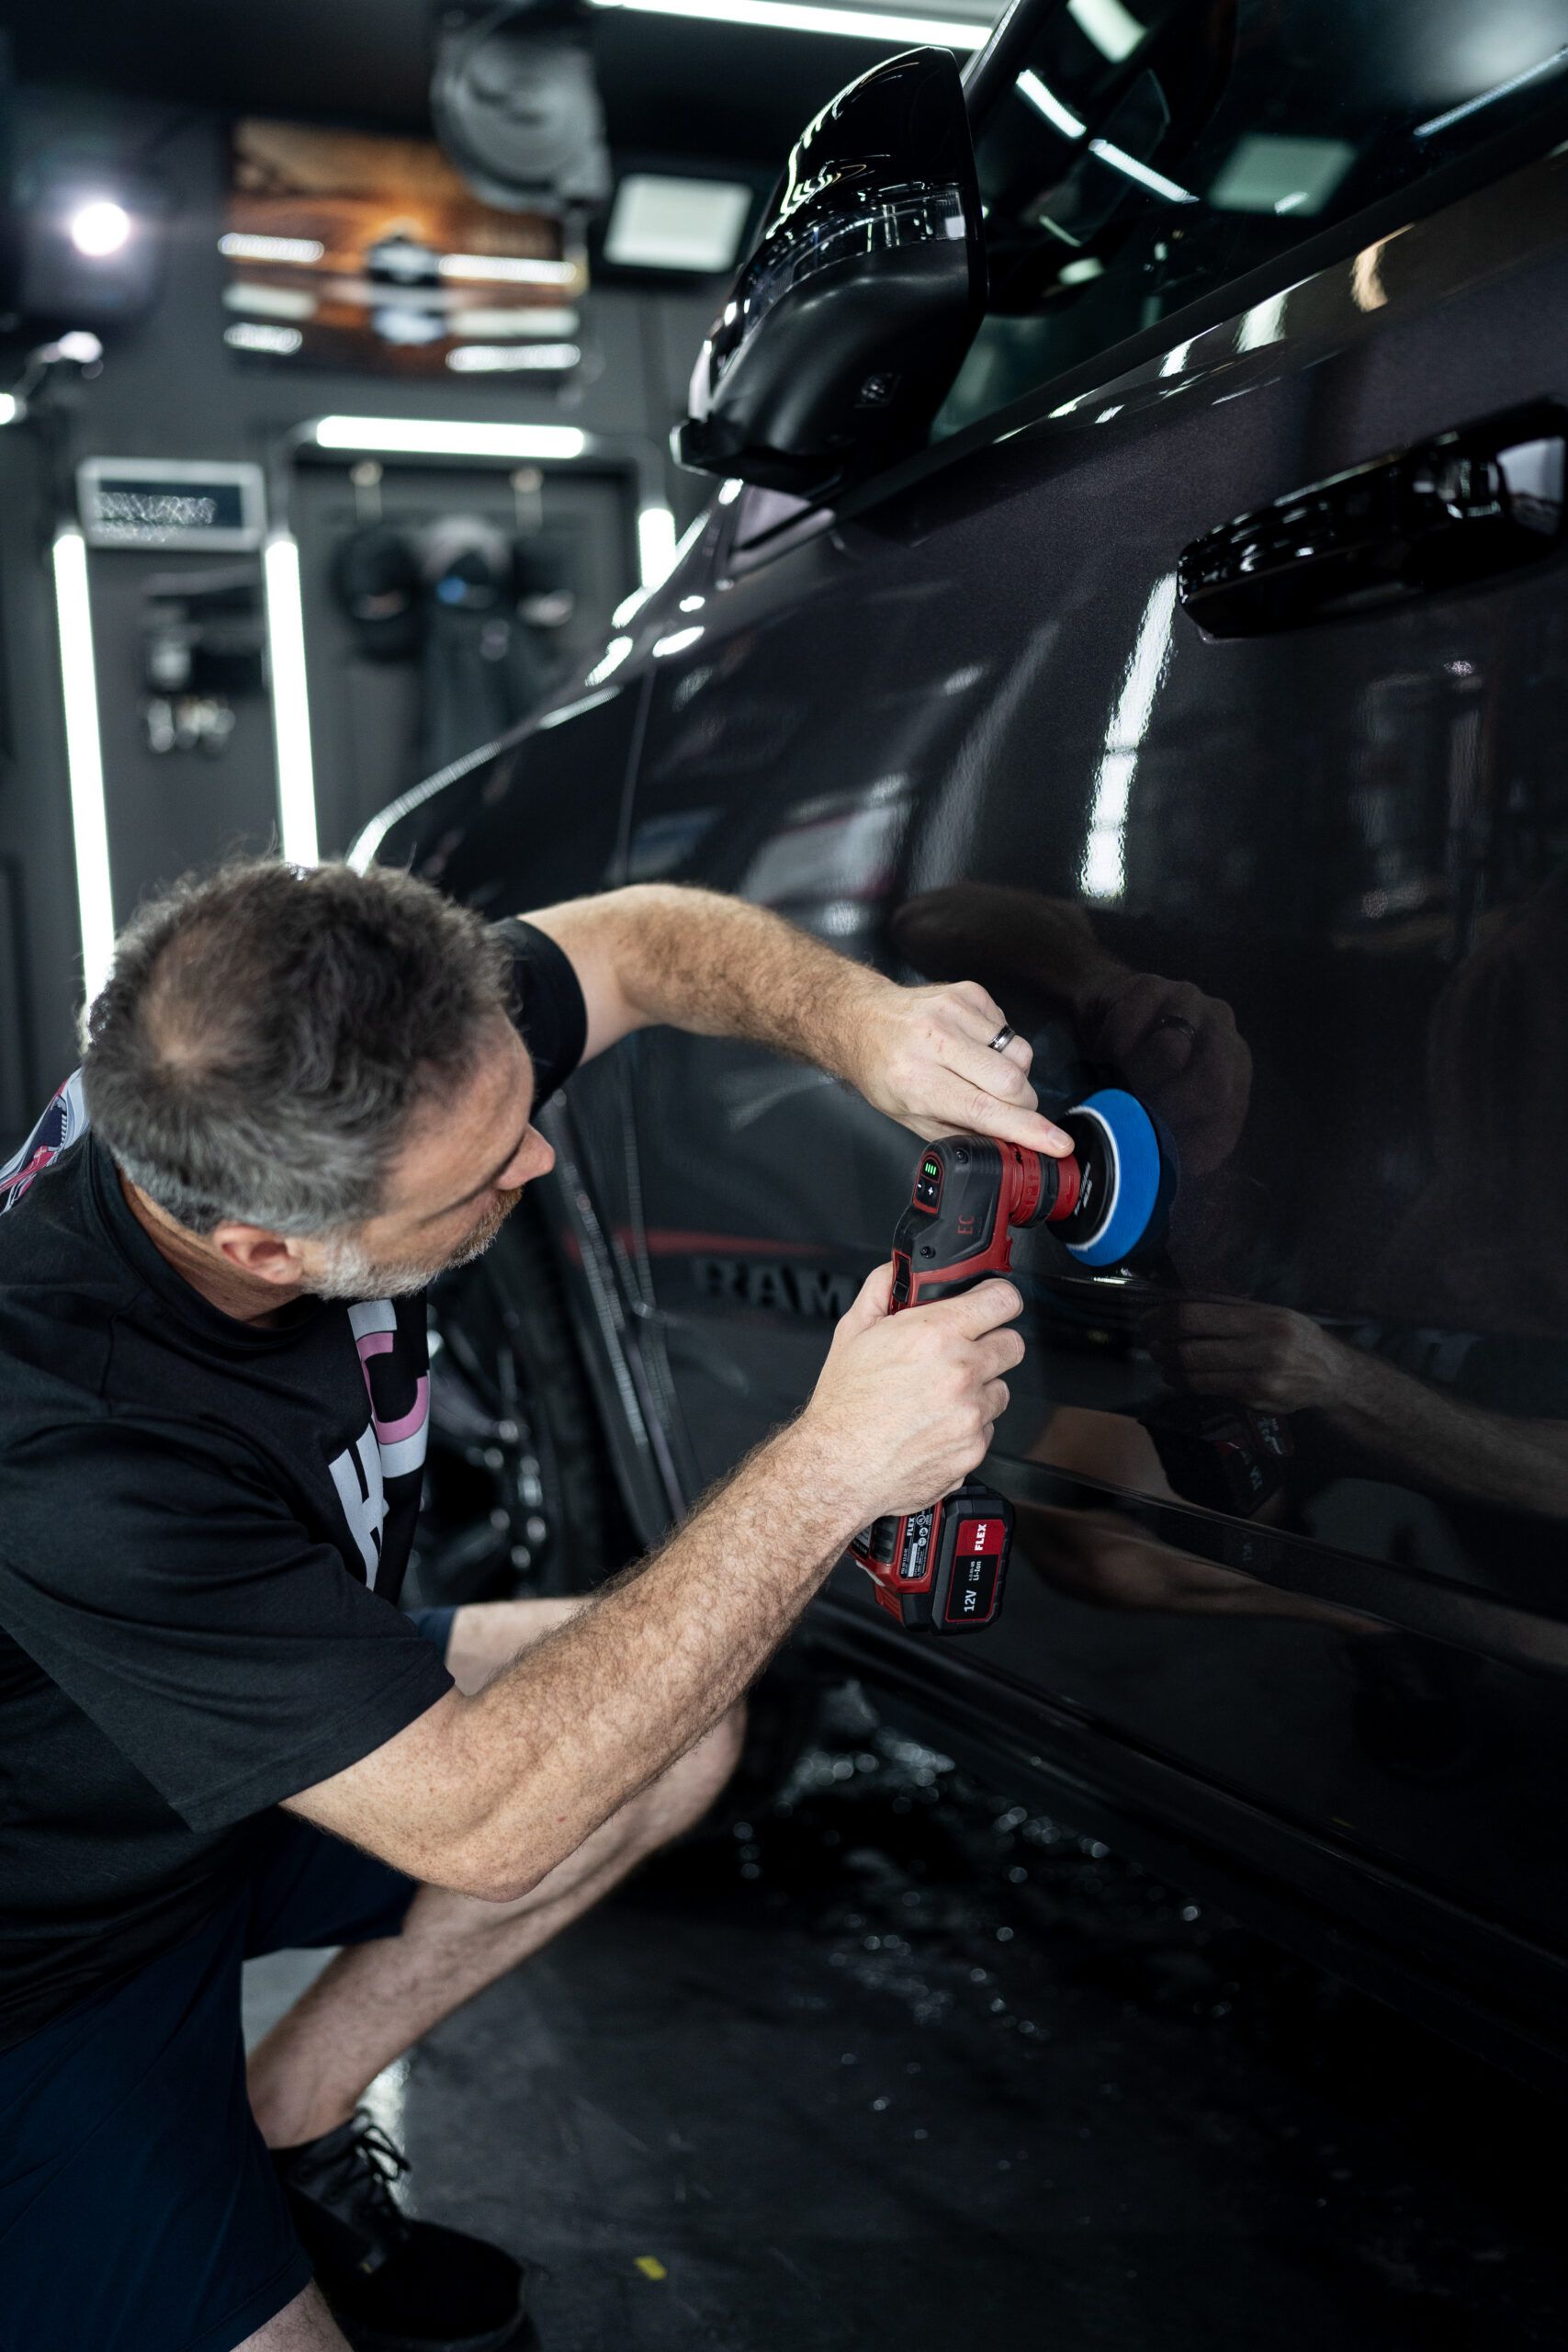 A man is polishing a car with a machine in a garage.